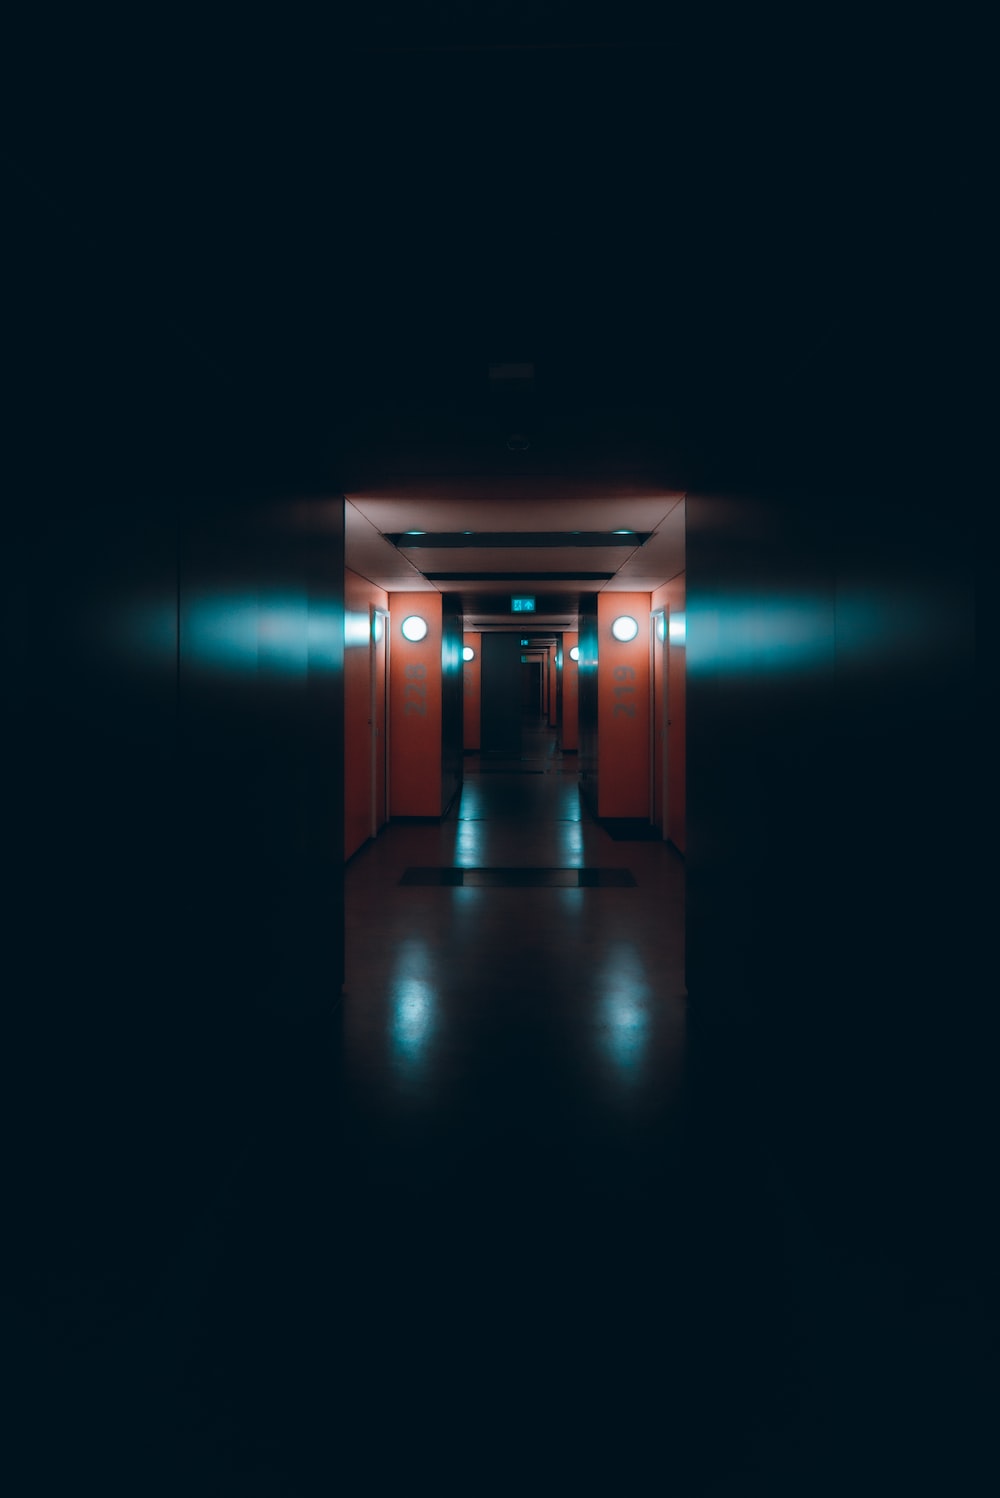 Dark Hallway Picture. Download Free Image